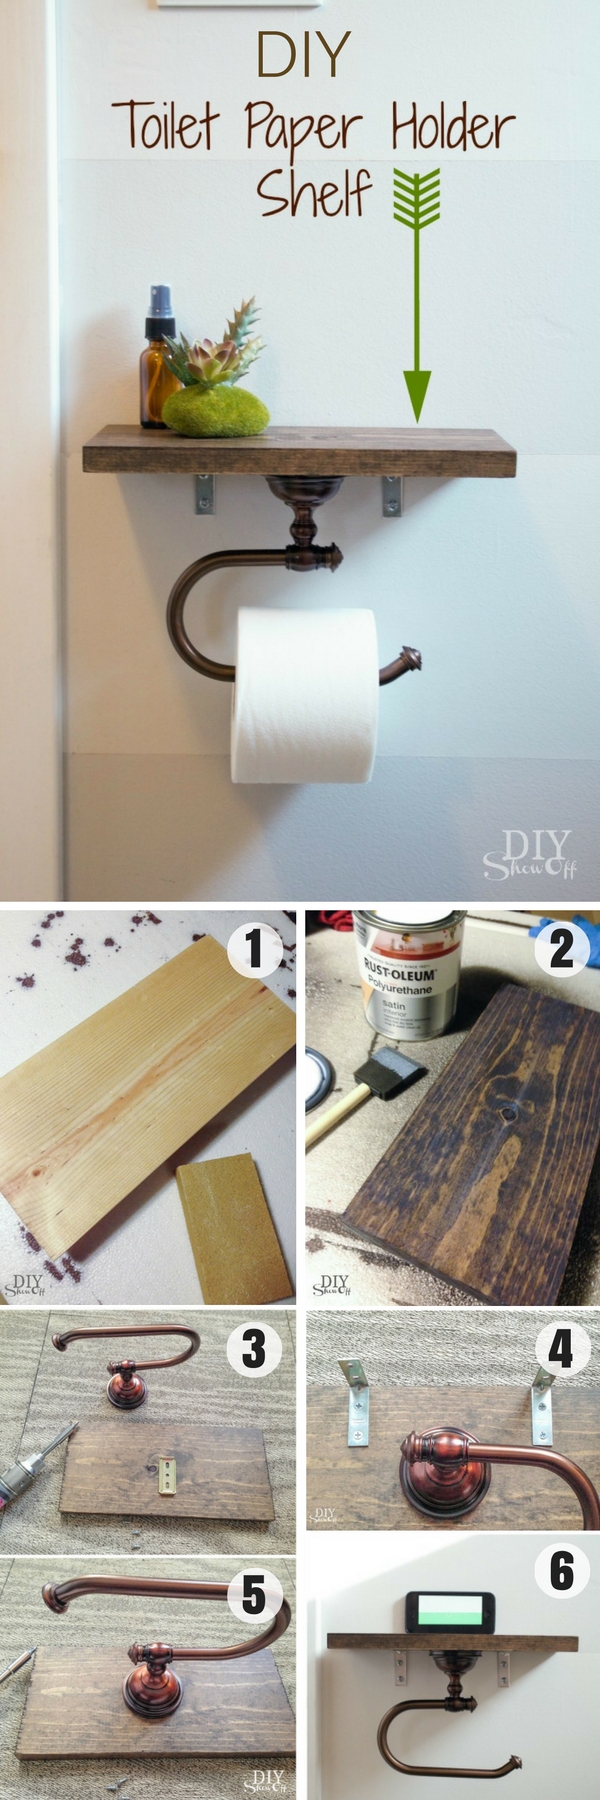 35 Easy & Gorgeous DIY Rustic Bathroom Decor Ideas on a Budget